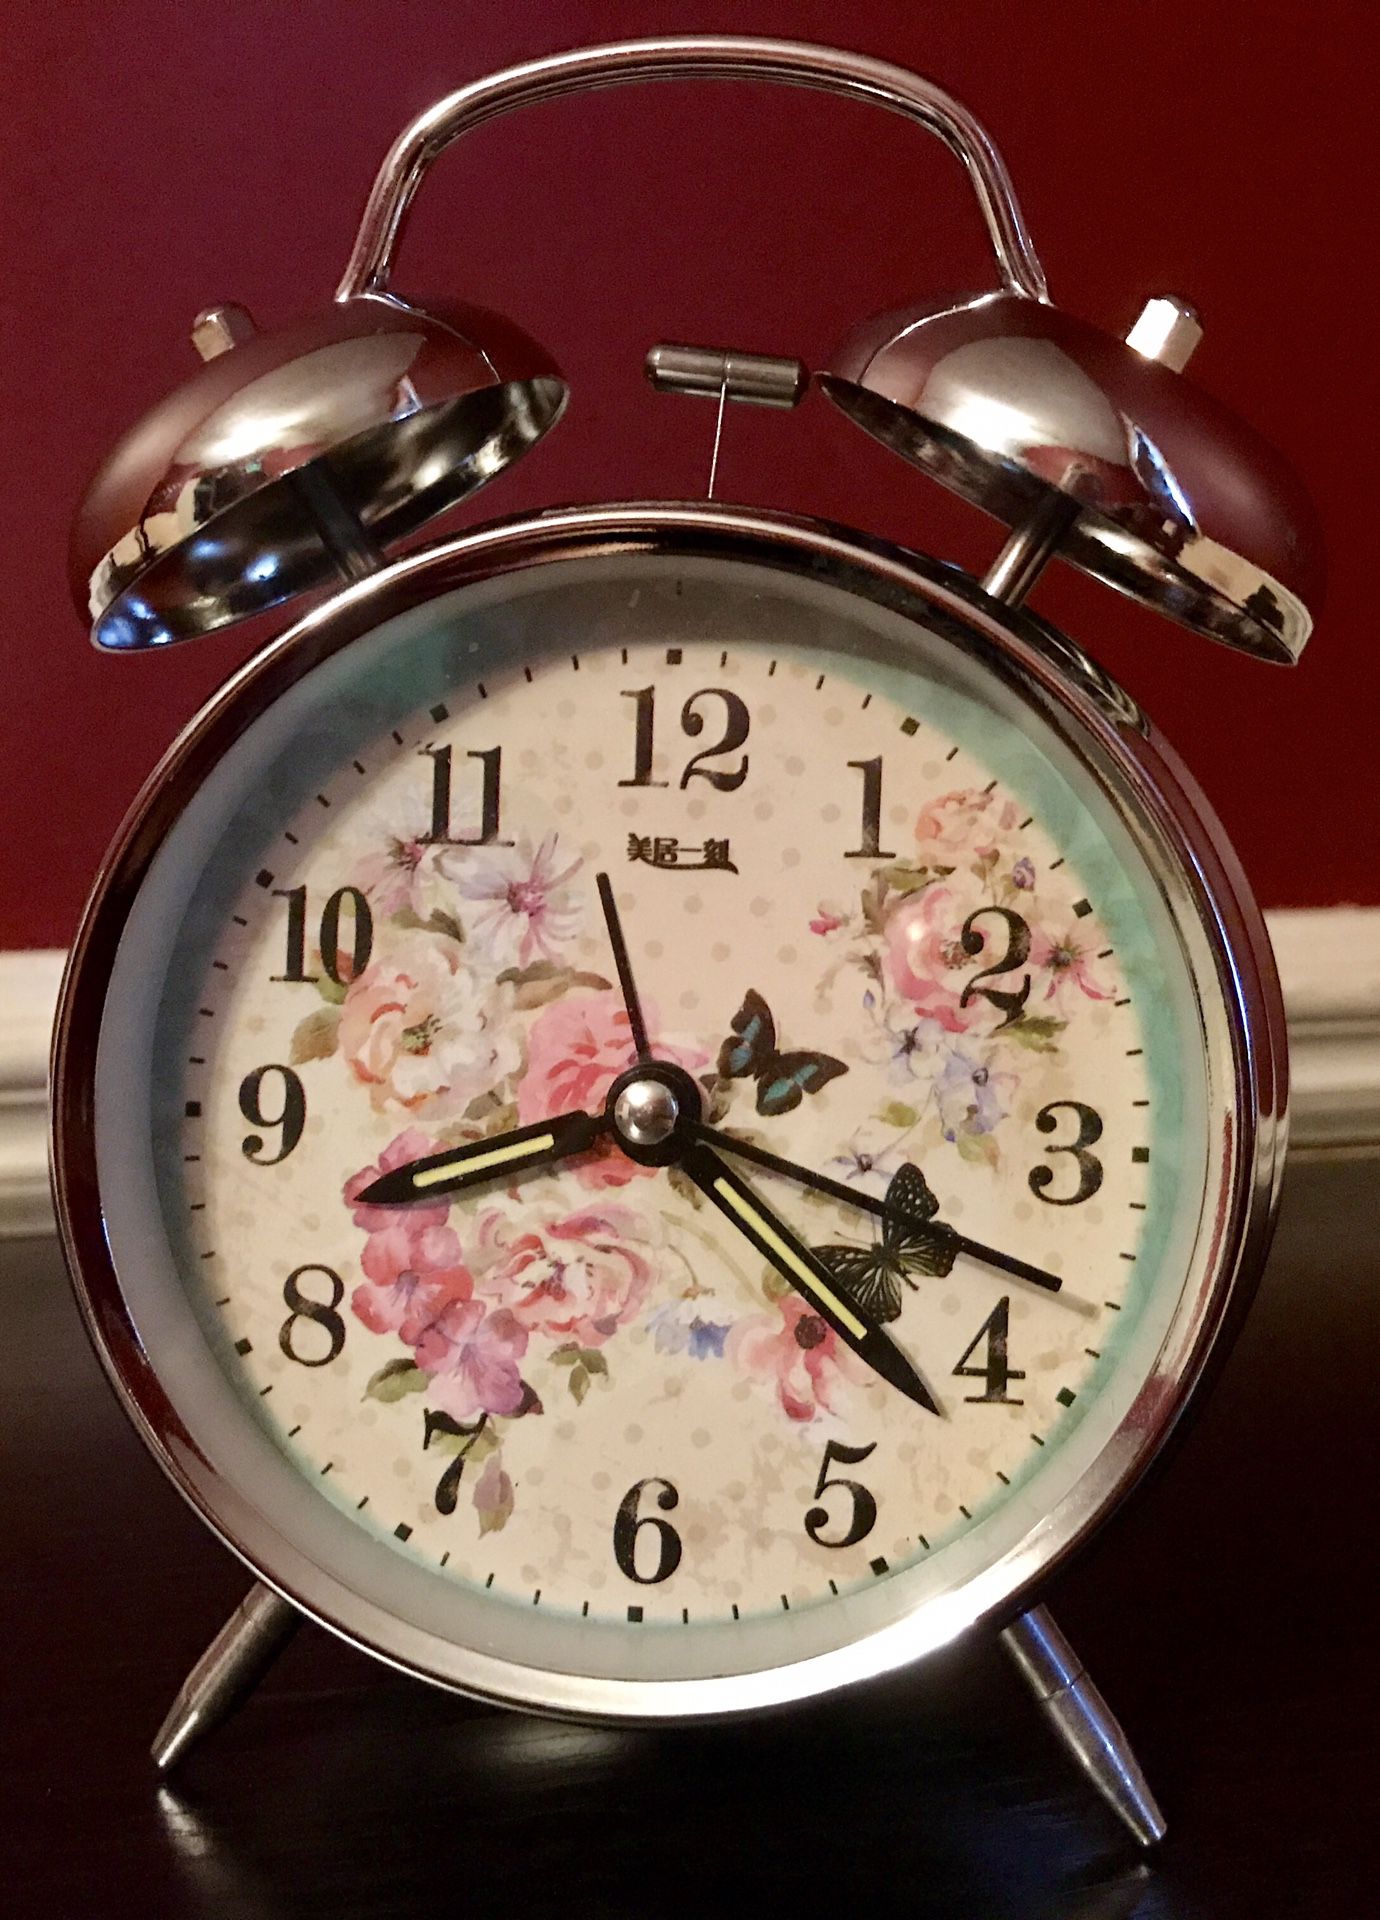 Decorative twin bell alarm clock